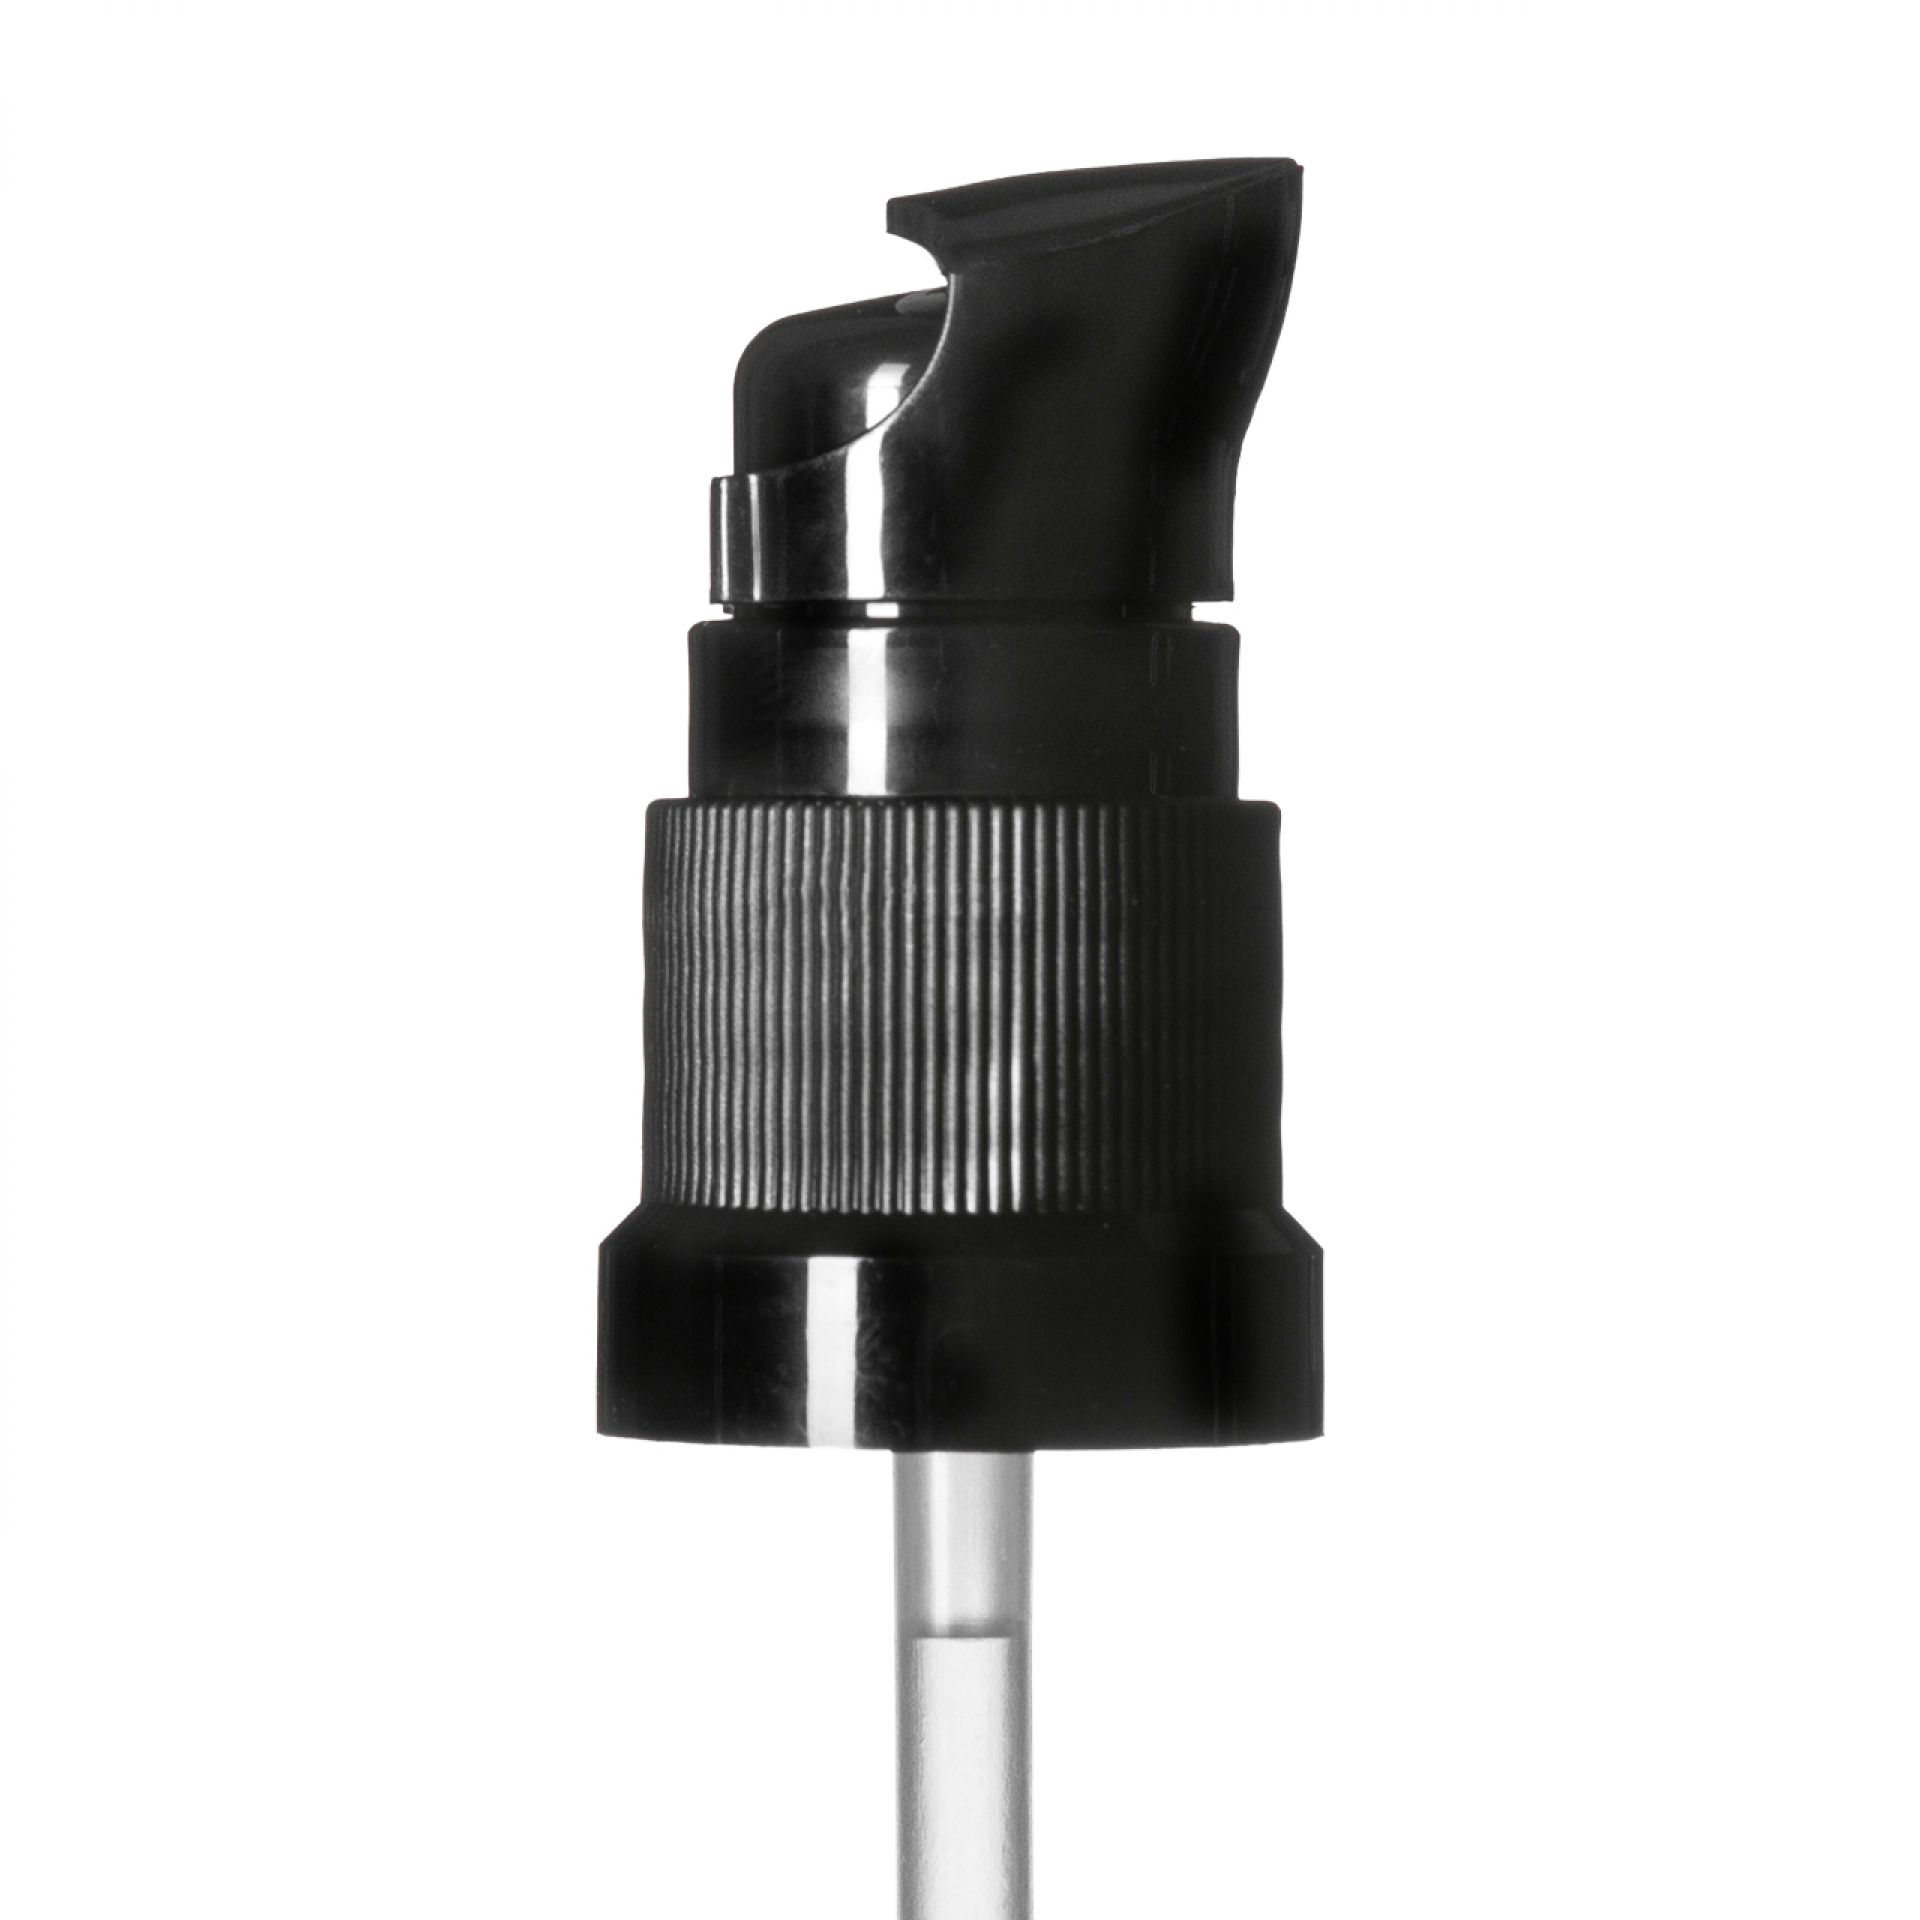 Lotion pump Metropolitan DIN18, PP, black, dose 0.14ml, black security clip (Orion 5)